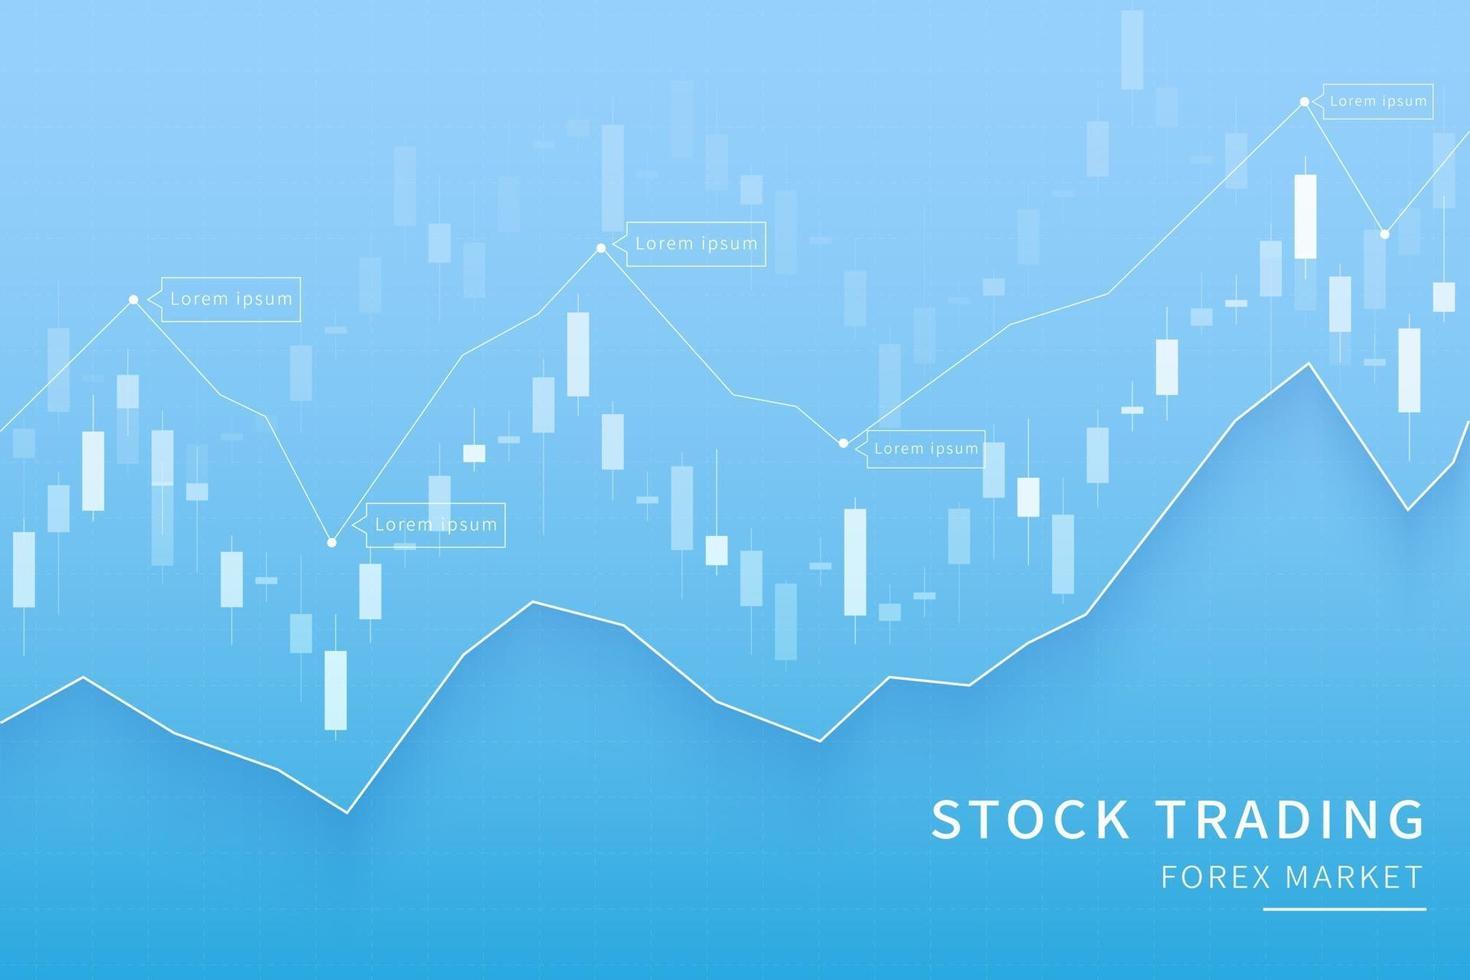 ljusstake diagram i finansmarknaden illustration på blå bakgrund vektor